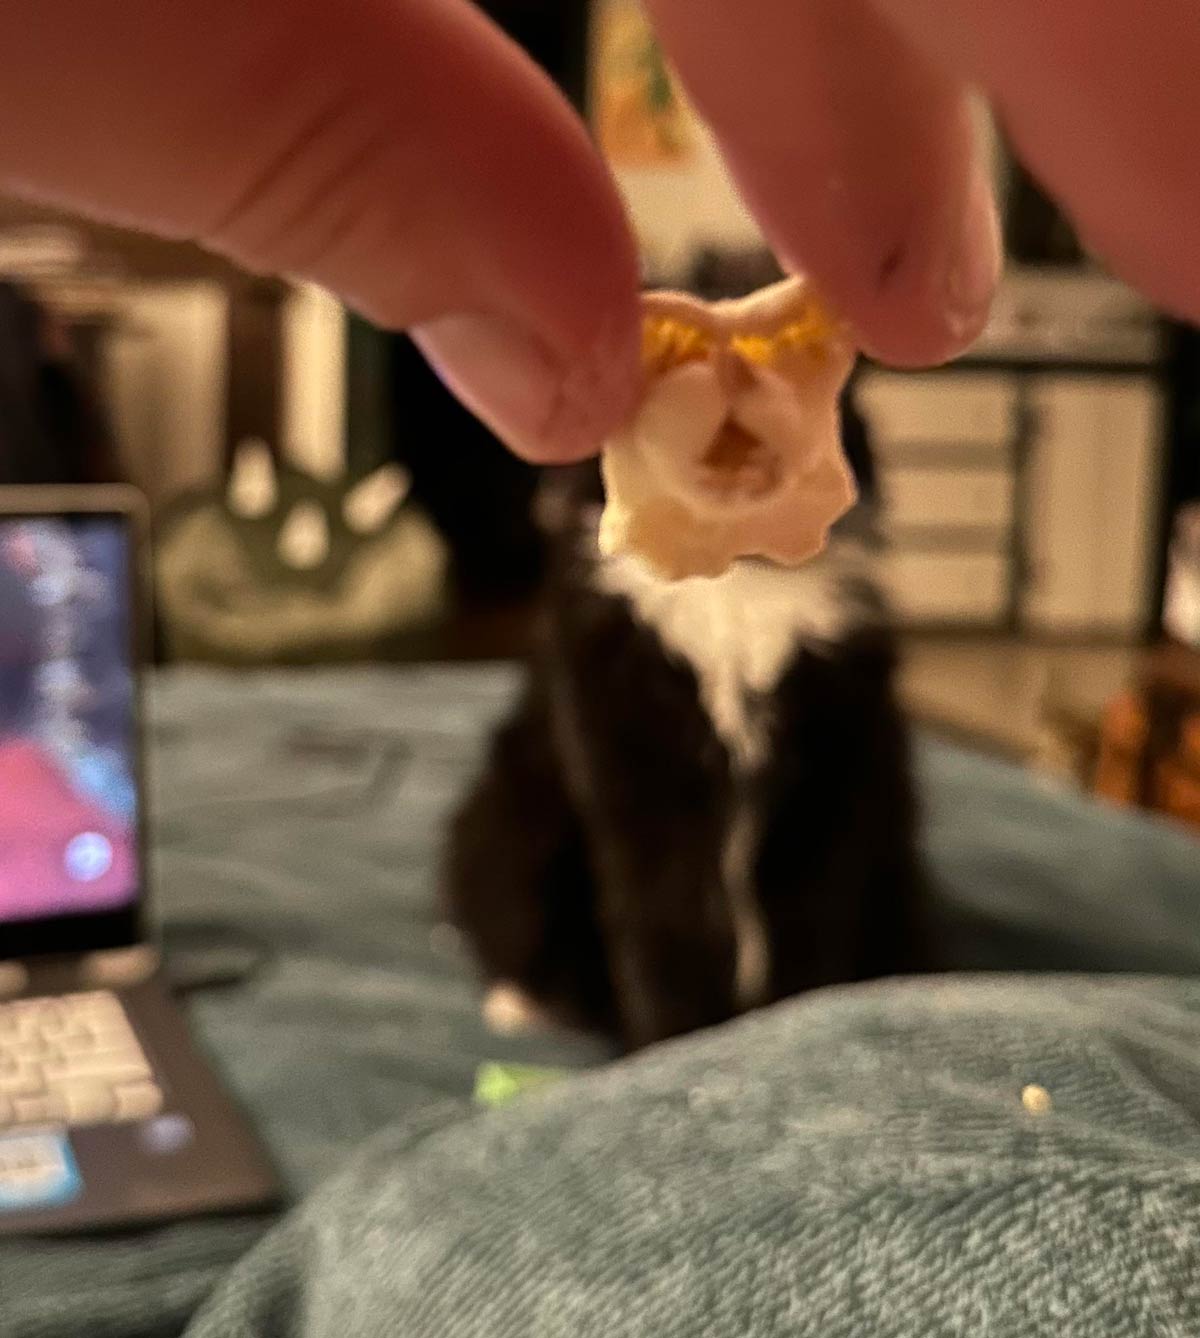 This piece of popcorn looks like my girlfriend’s cat